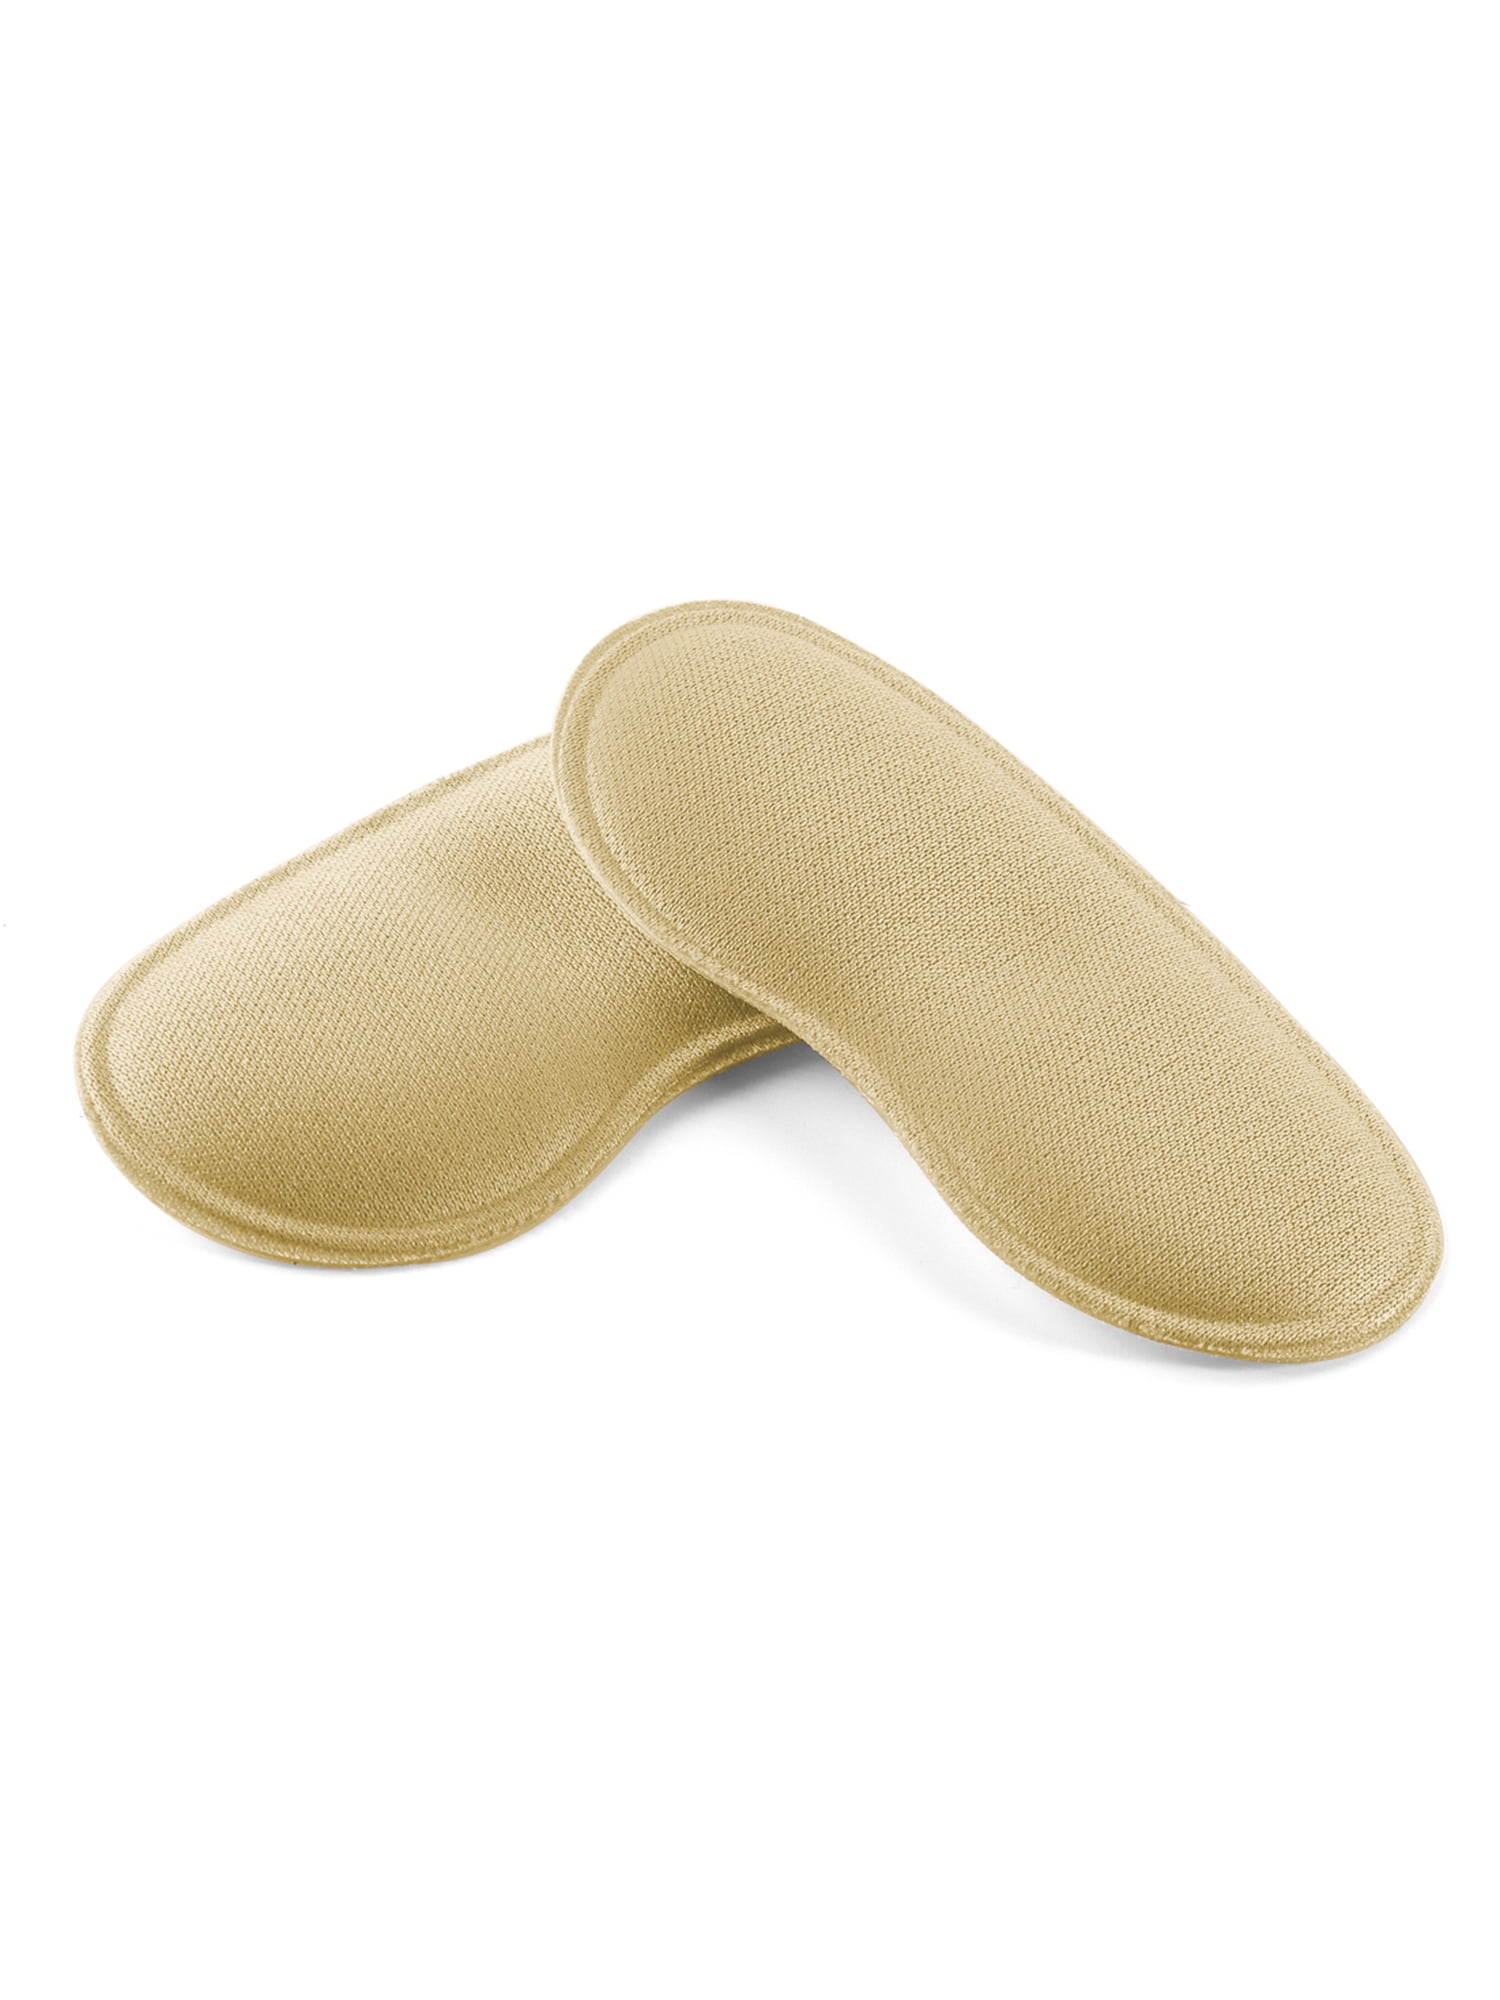 Sponge Self-adhesive Shoe Pad Inserts 